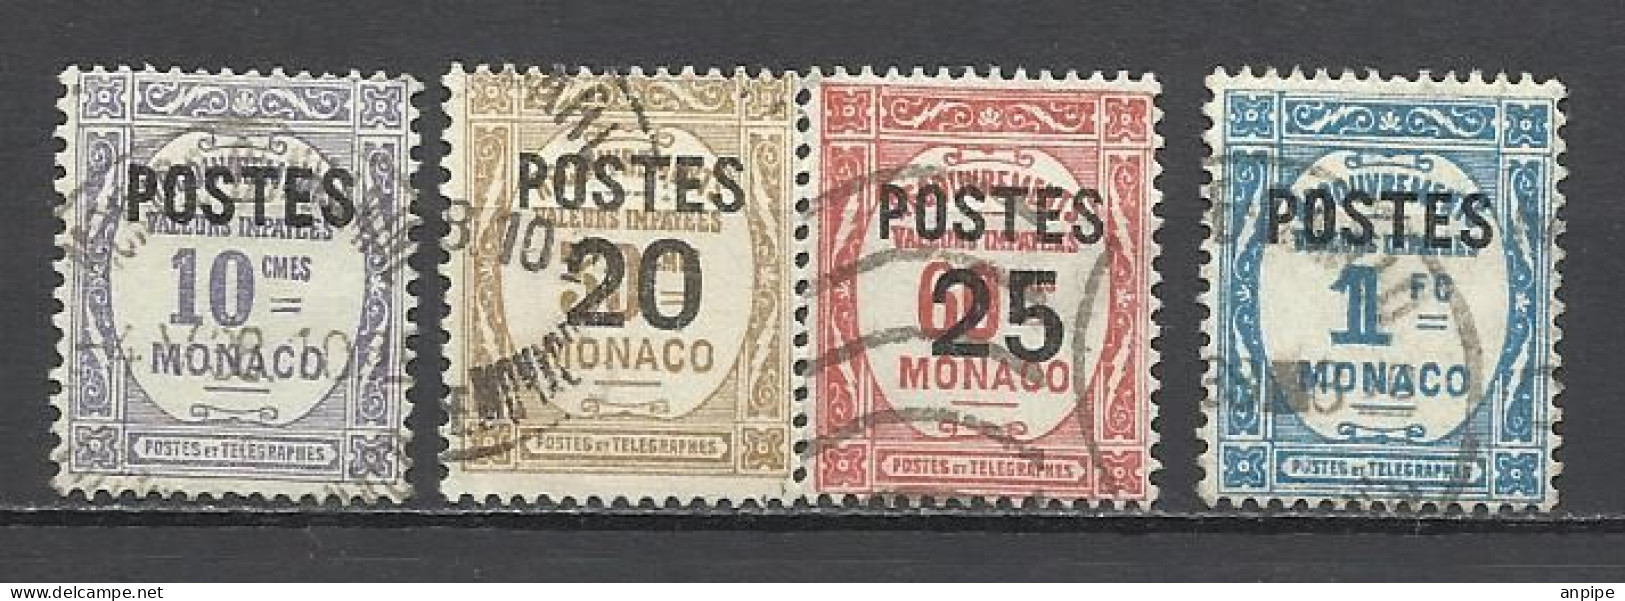 MÓNACO, 1937 - Usati